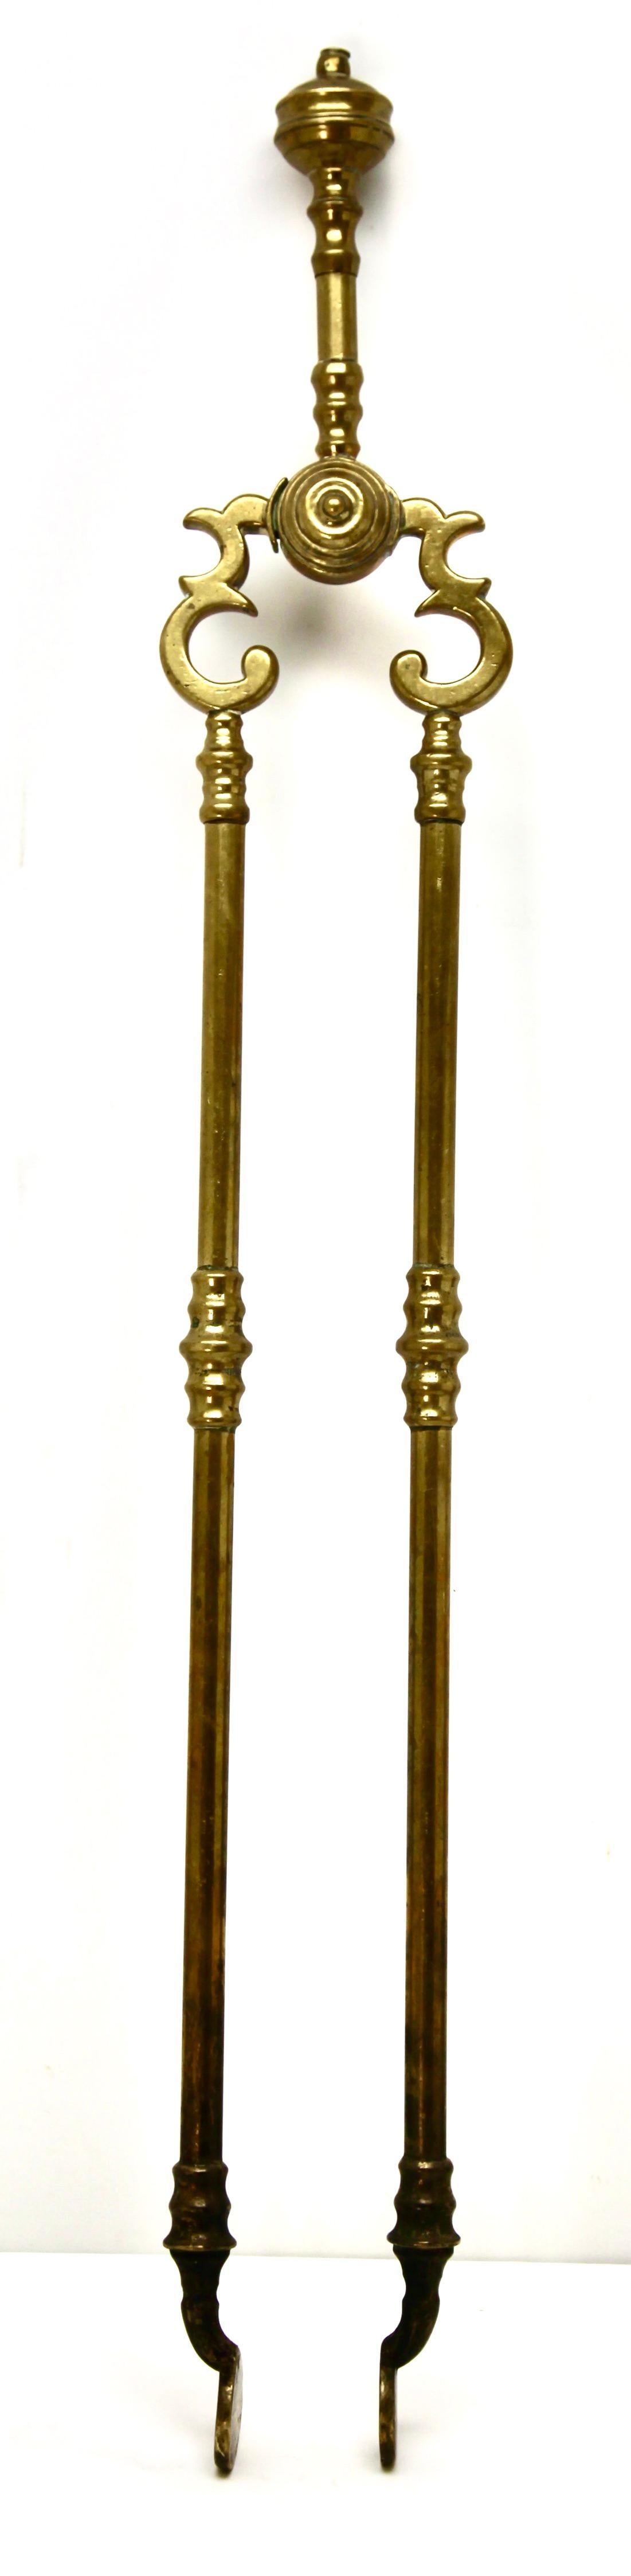 Sculptural Very Decorative Solid Brass Three-Piece Fire Tool Set, 1870s 4